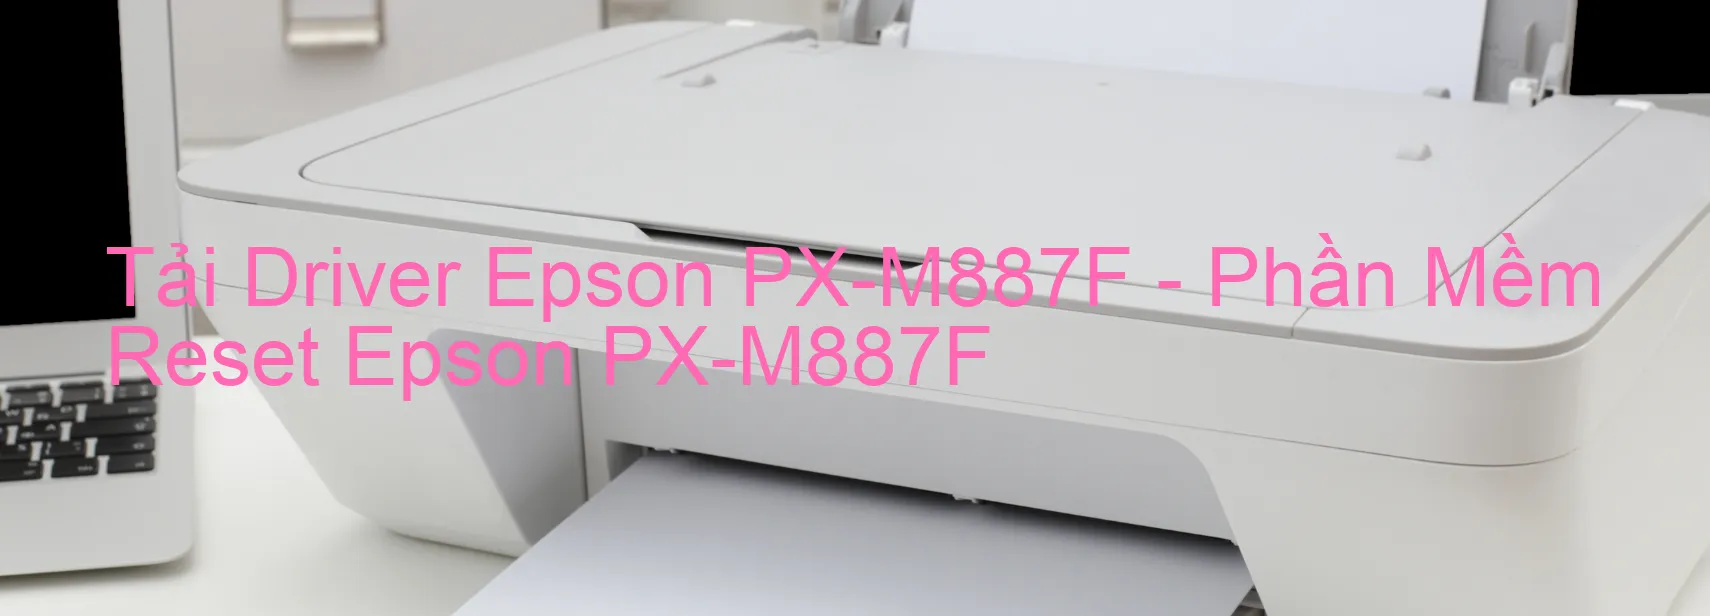 Driver Epson PX-M887F, Phần Mềm Reset Epson PX-M887F